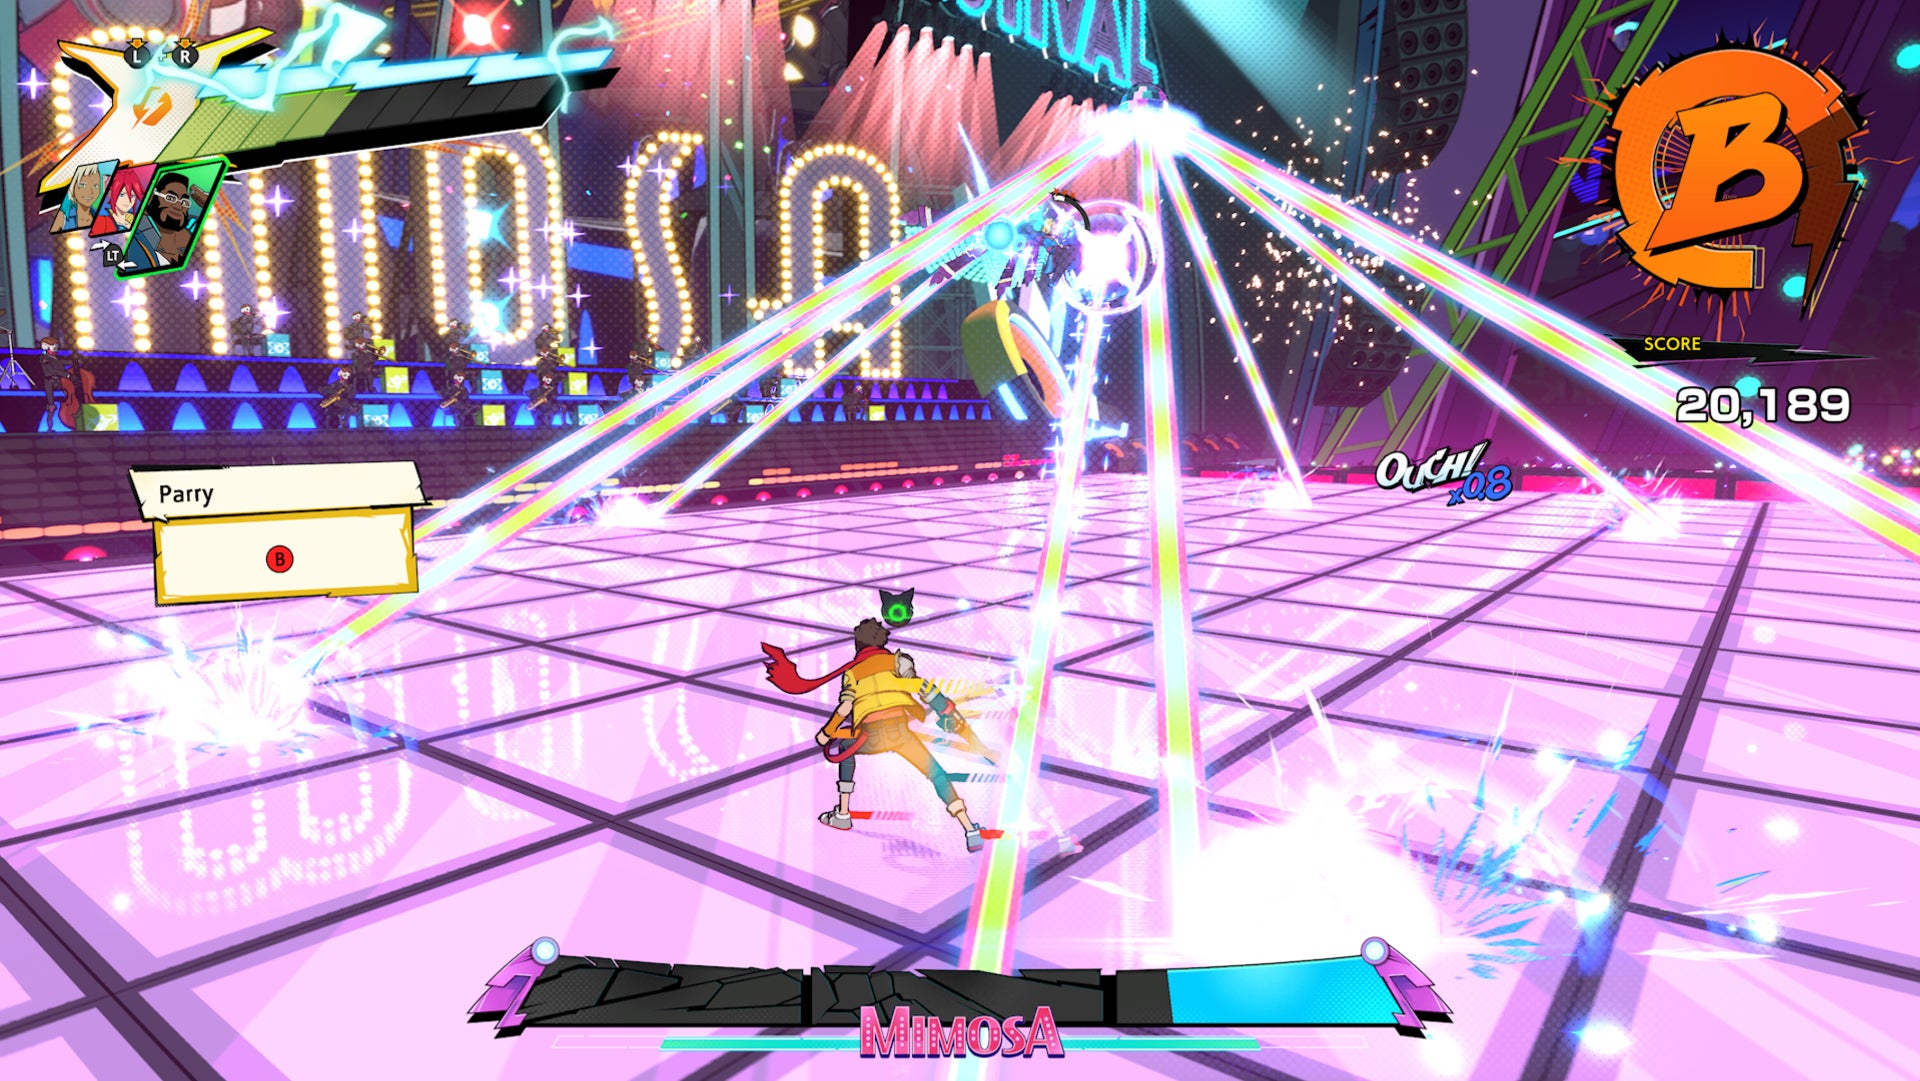 Hi-Fi RUSH, Mimosa using disco ball style attacks